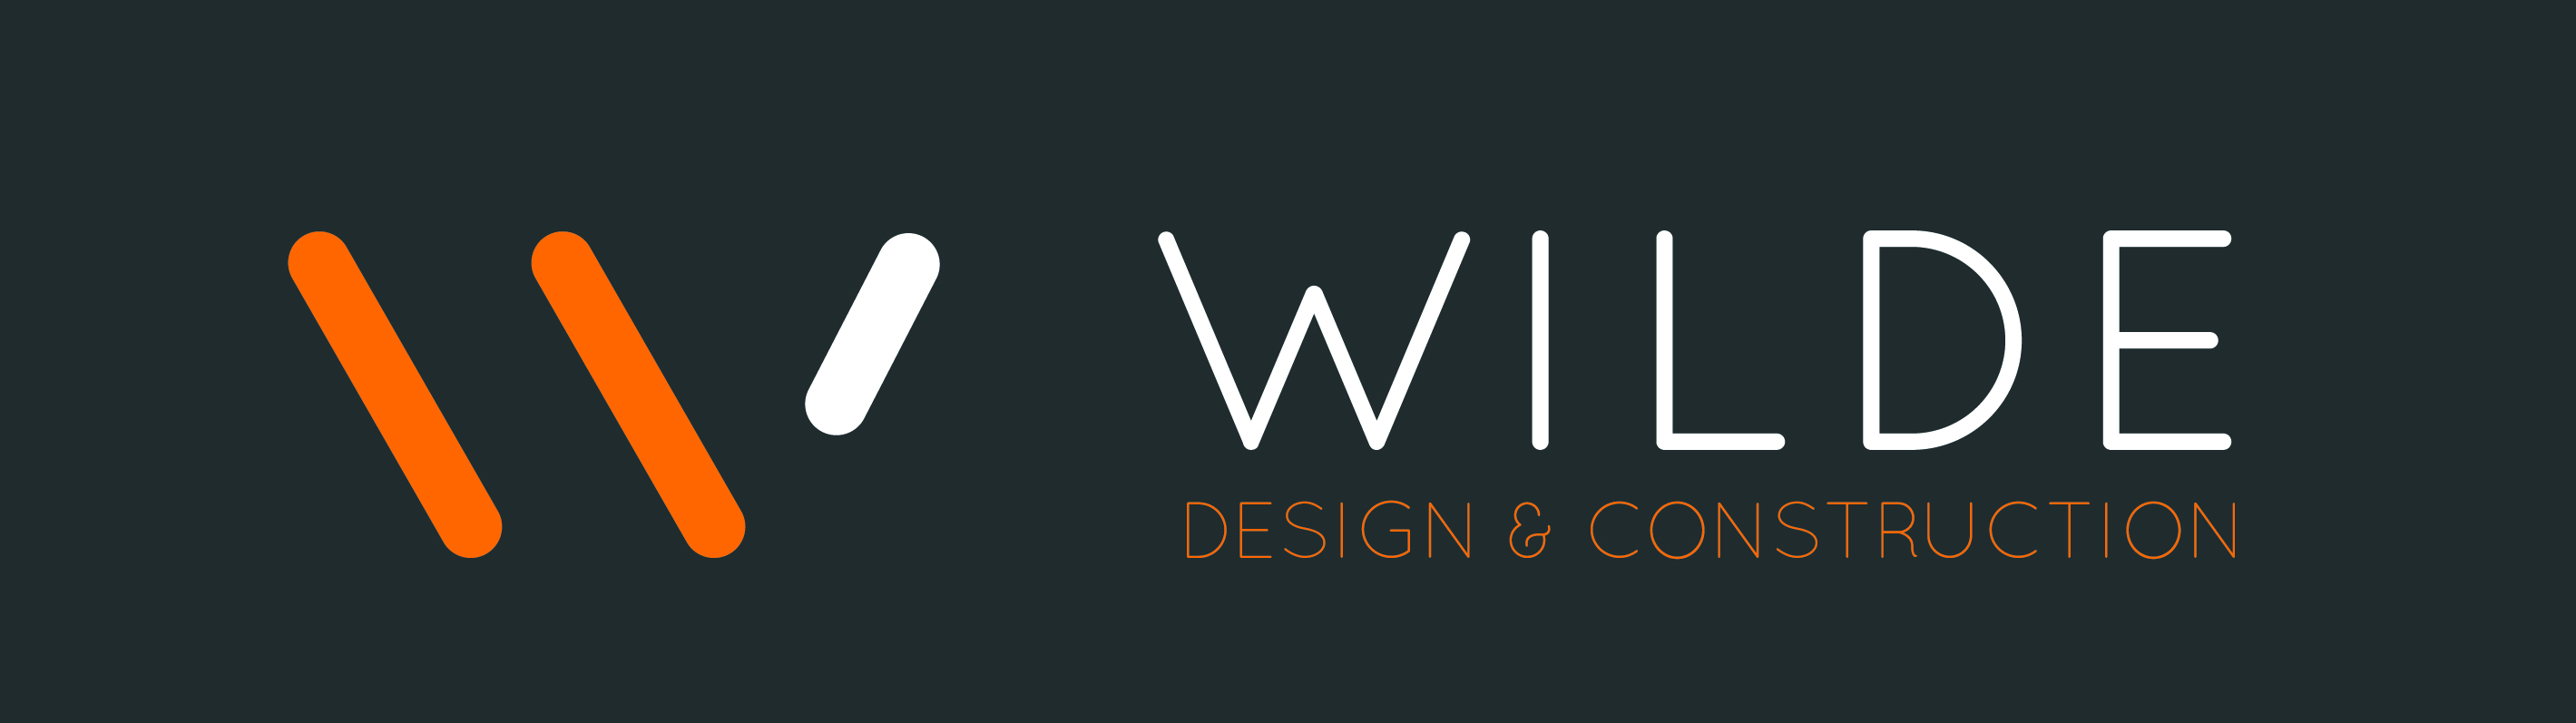 wilde_logo_jpg-04